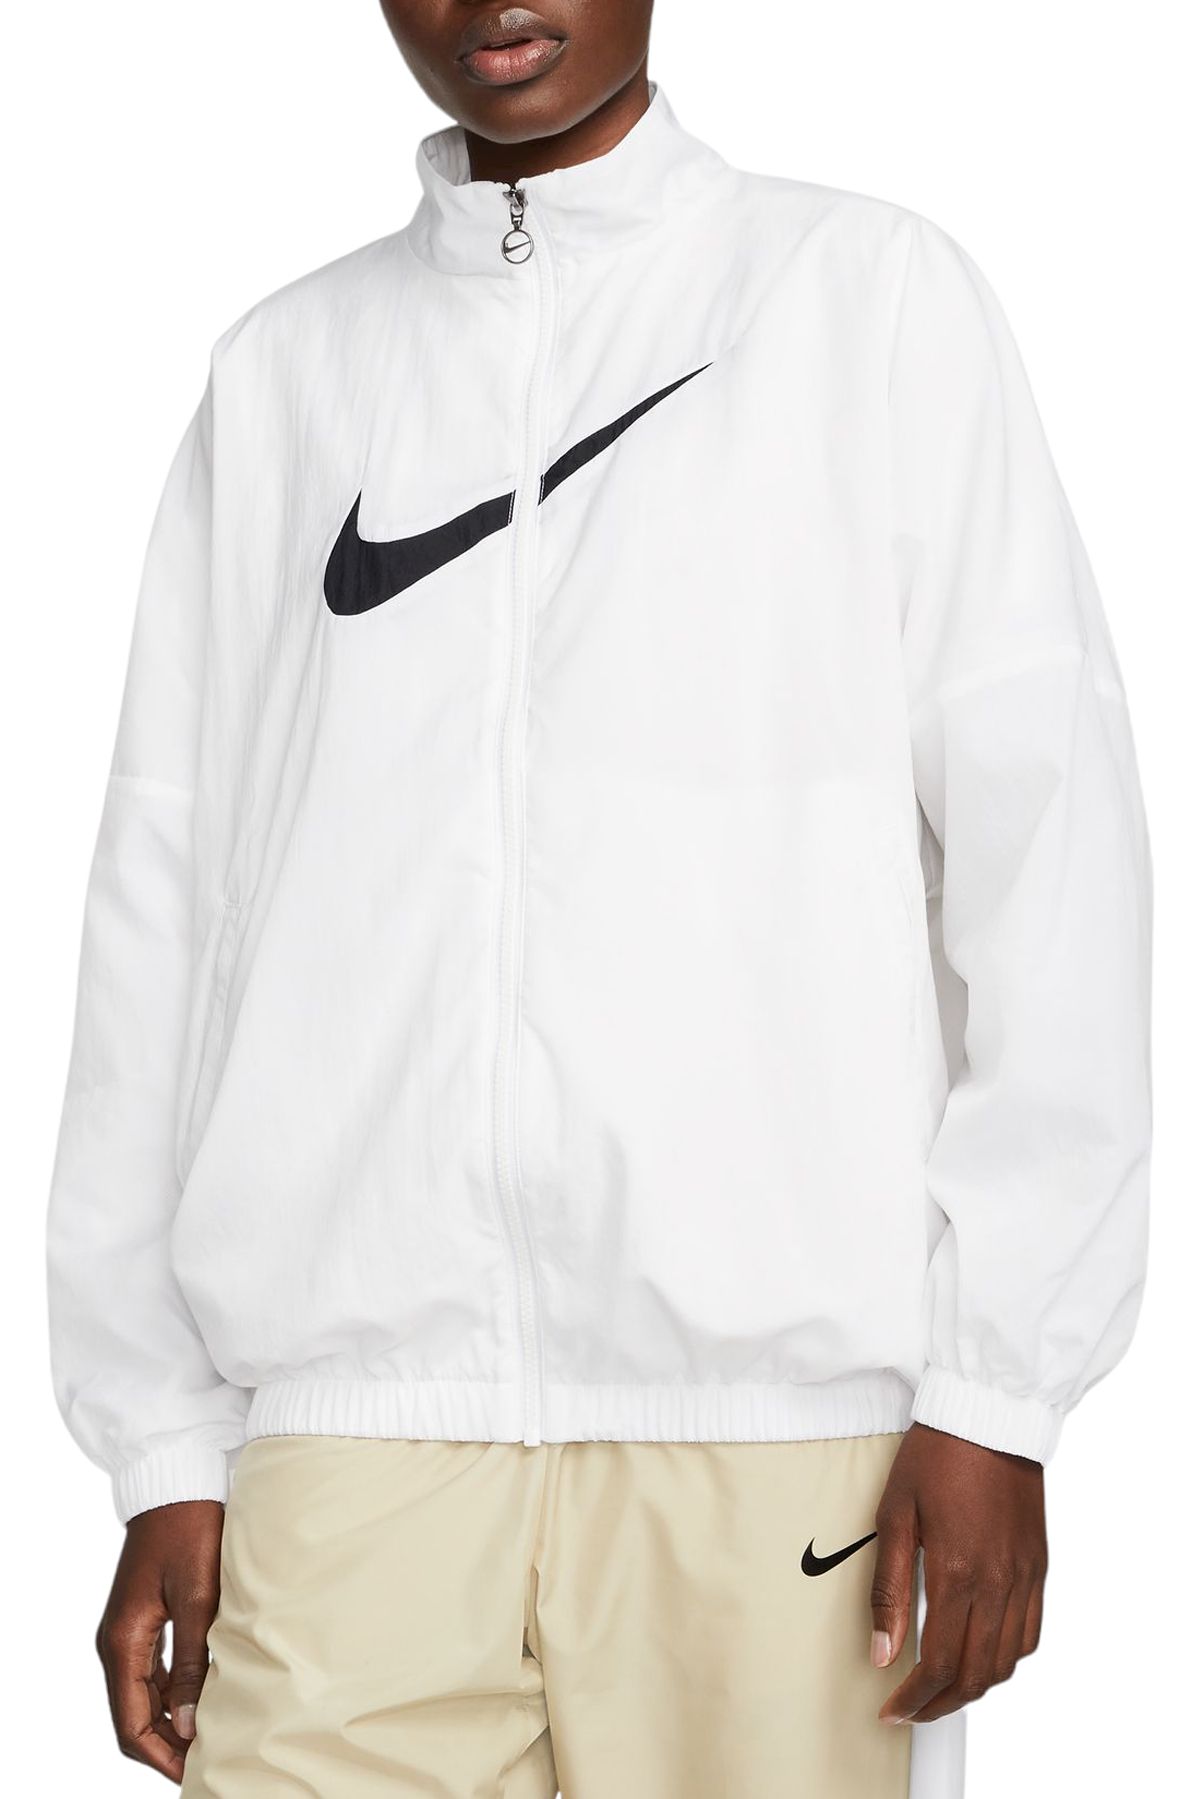 NIKE Sportswear Essential Woven Jacket DM6181 100 - Shiekh